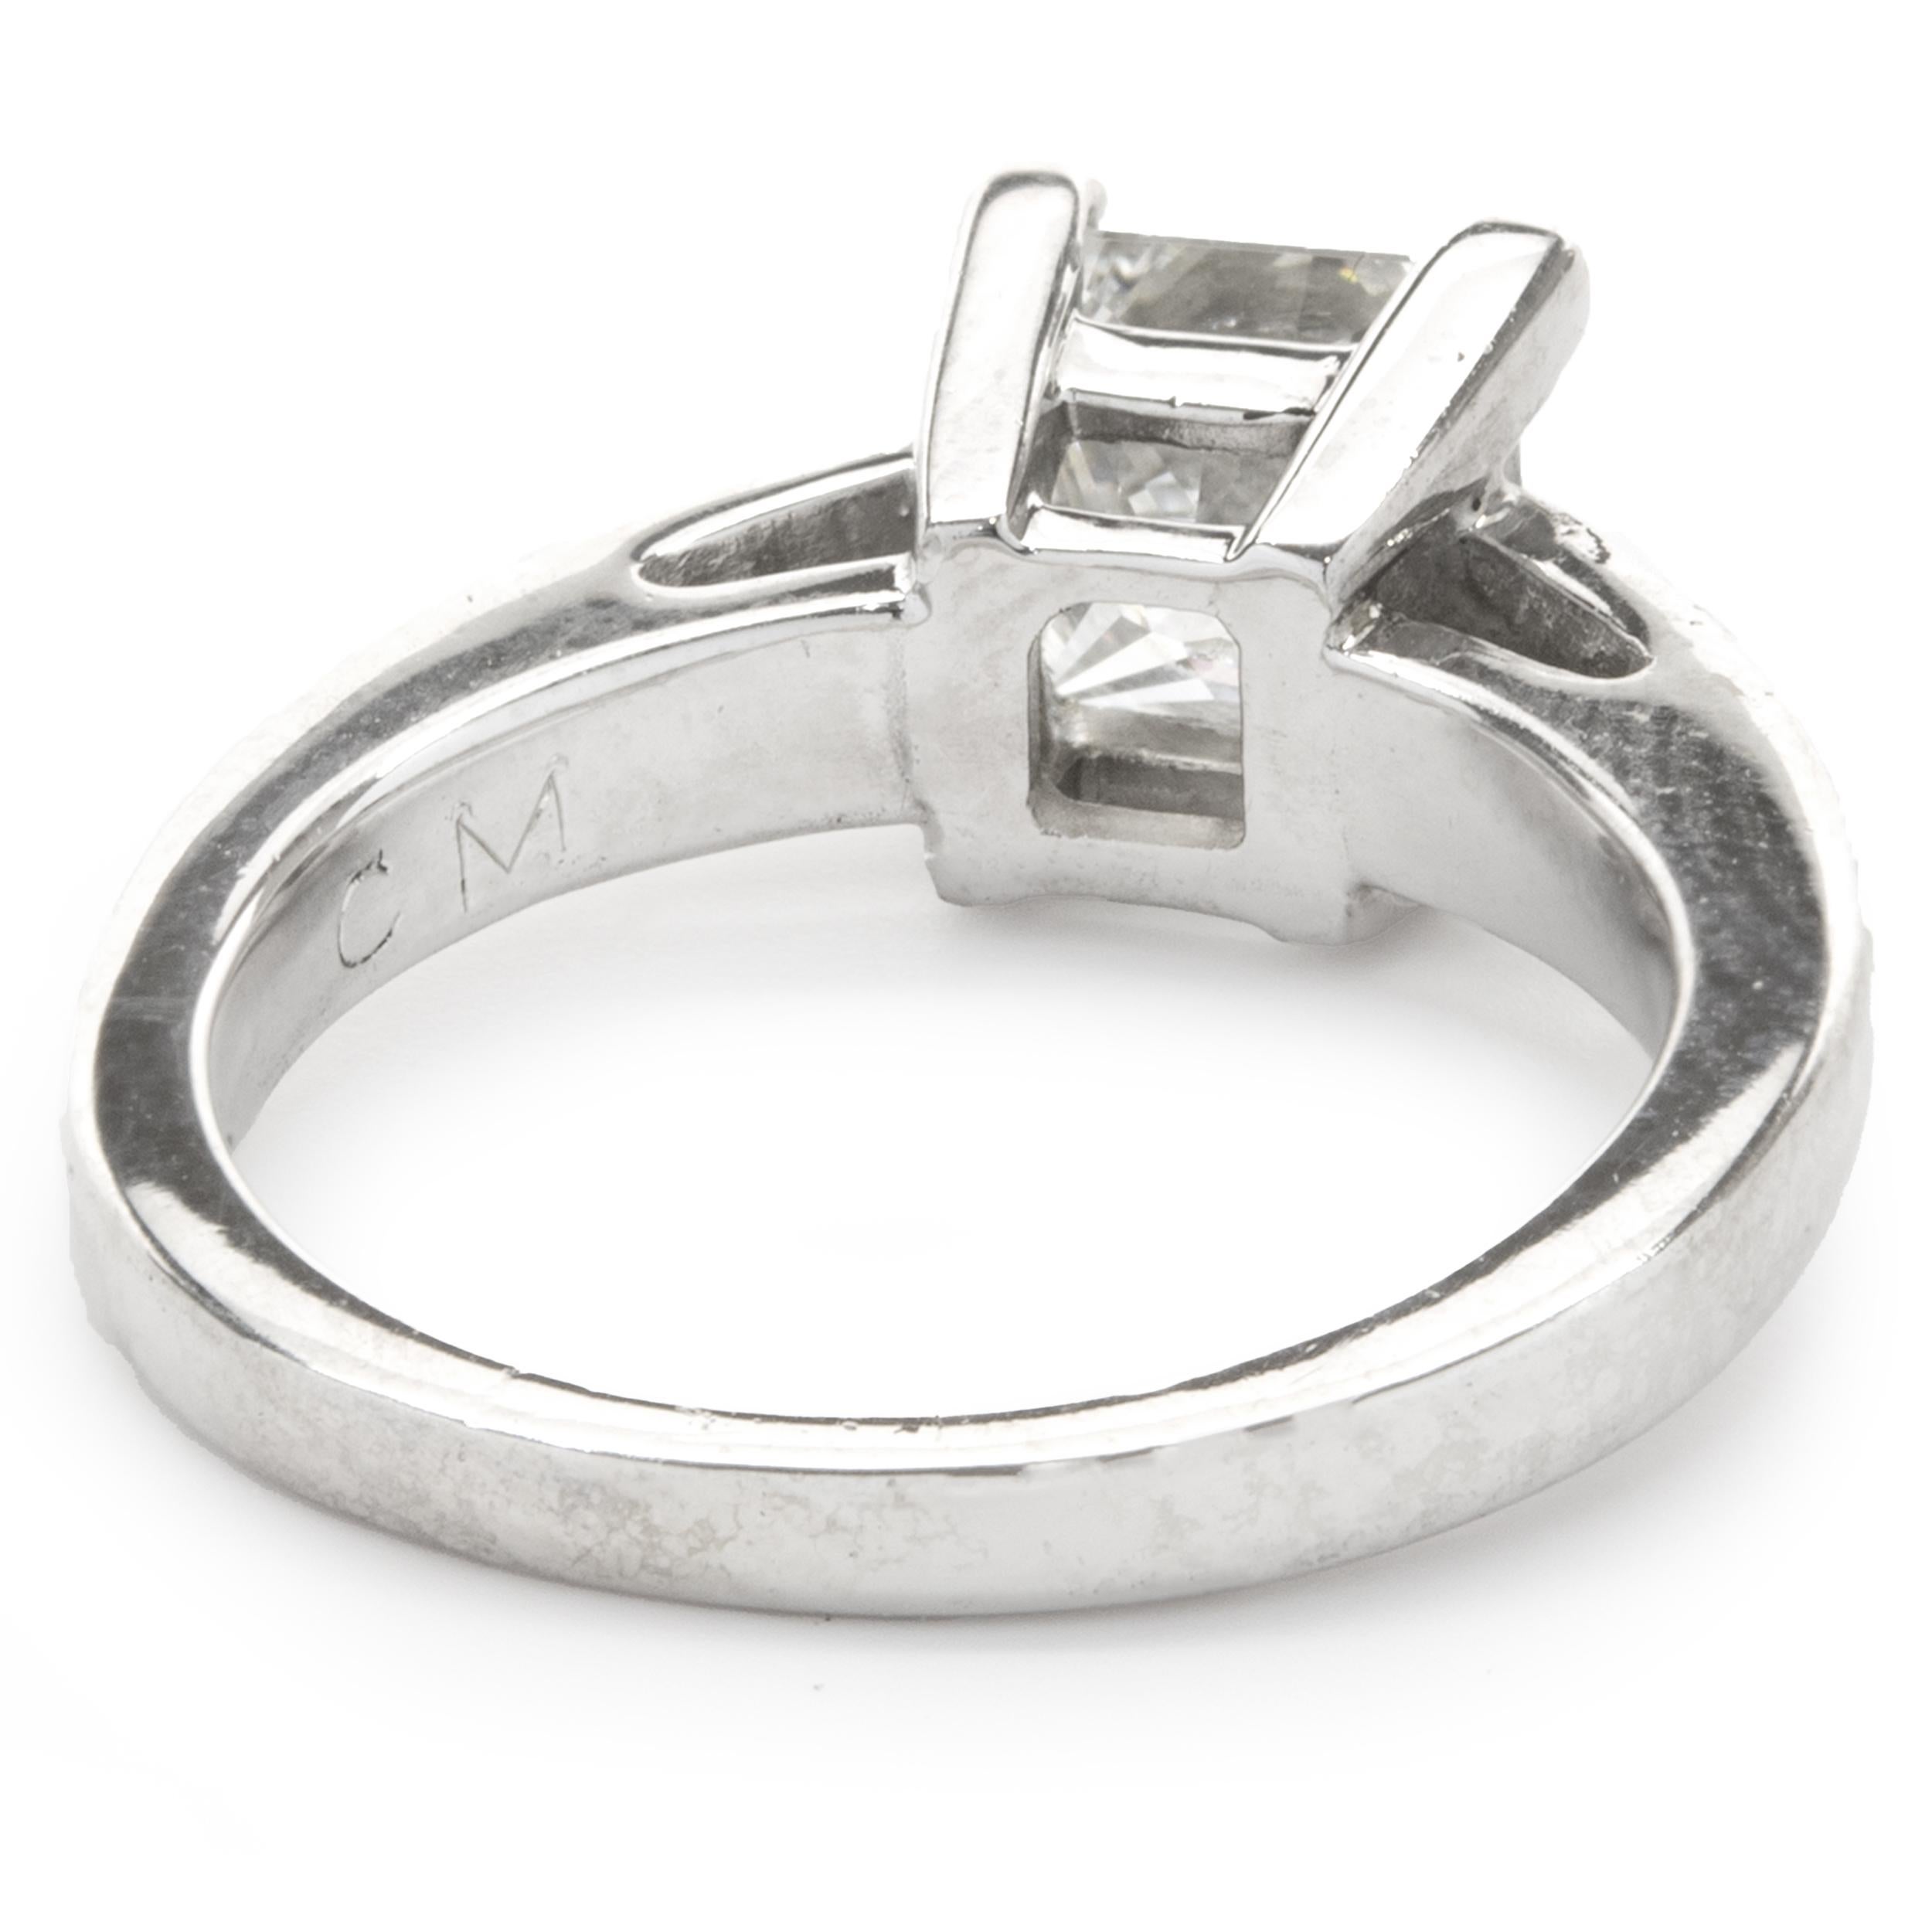 Platinum Princess Cut Solitaire Engagement Ring In Excellent Condition For Sale In Scottsdale, AZ